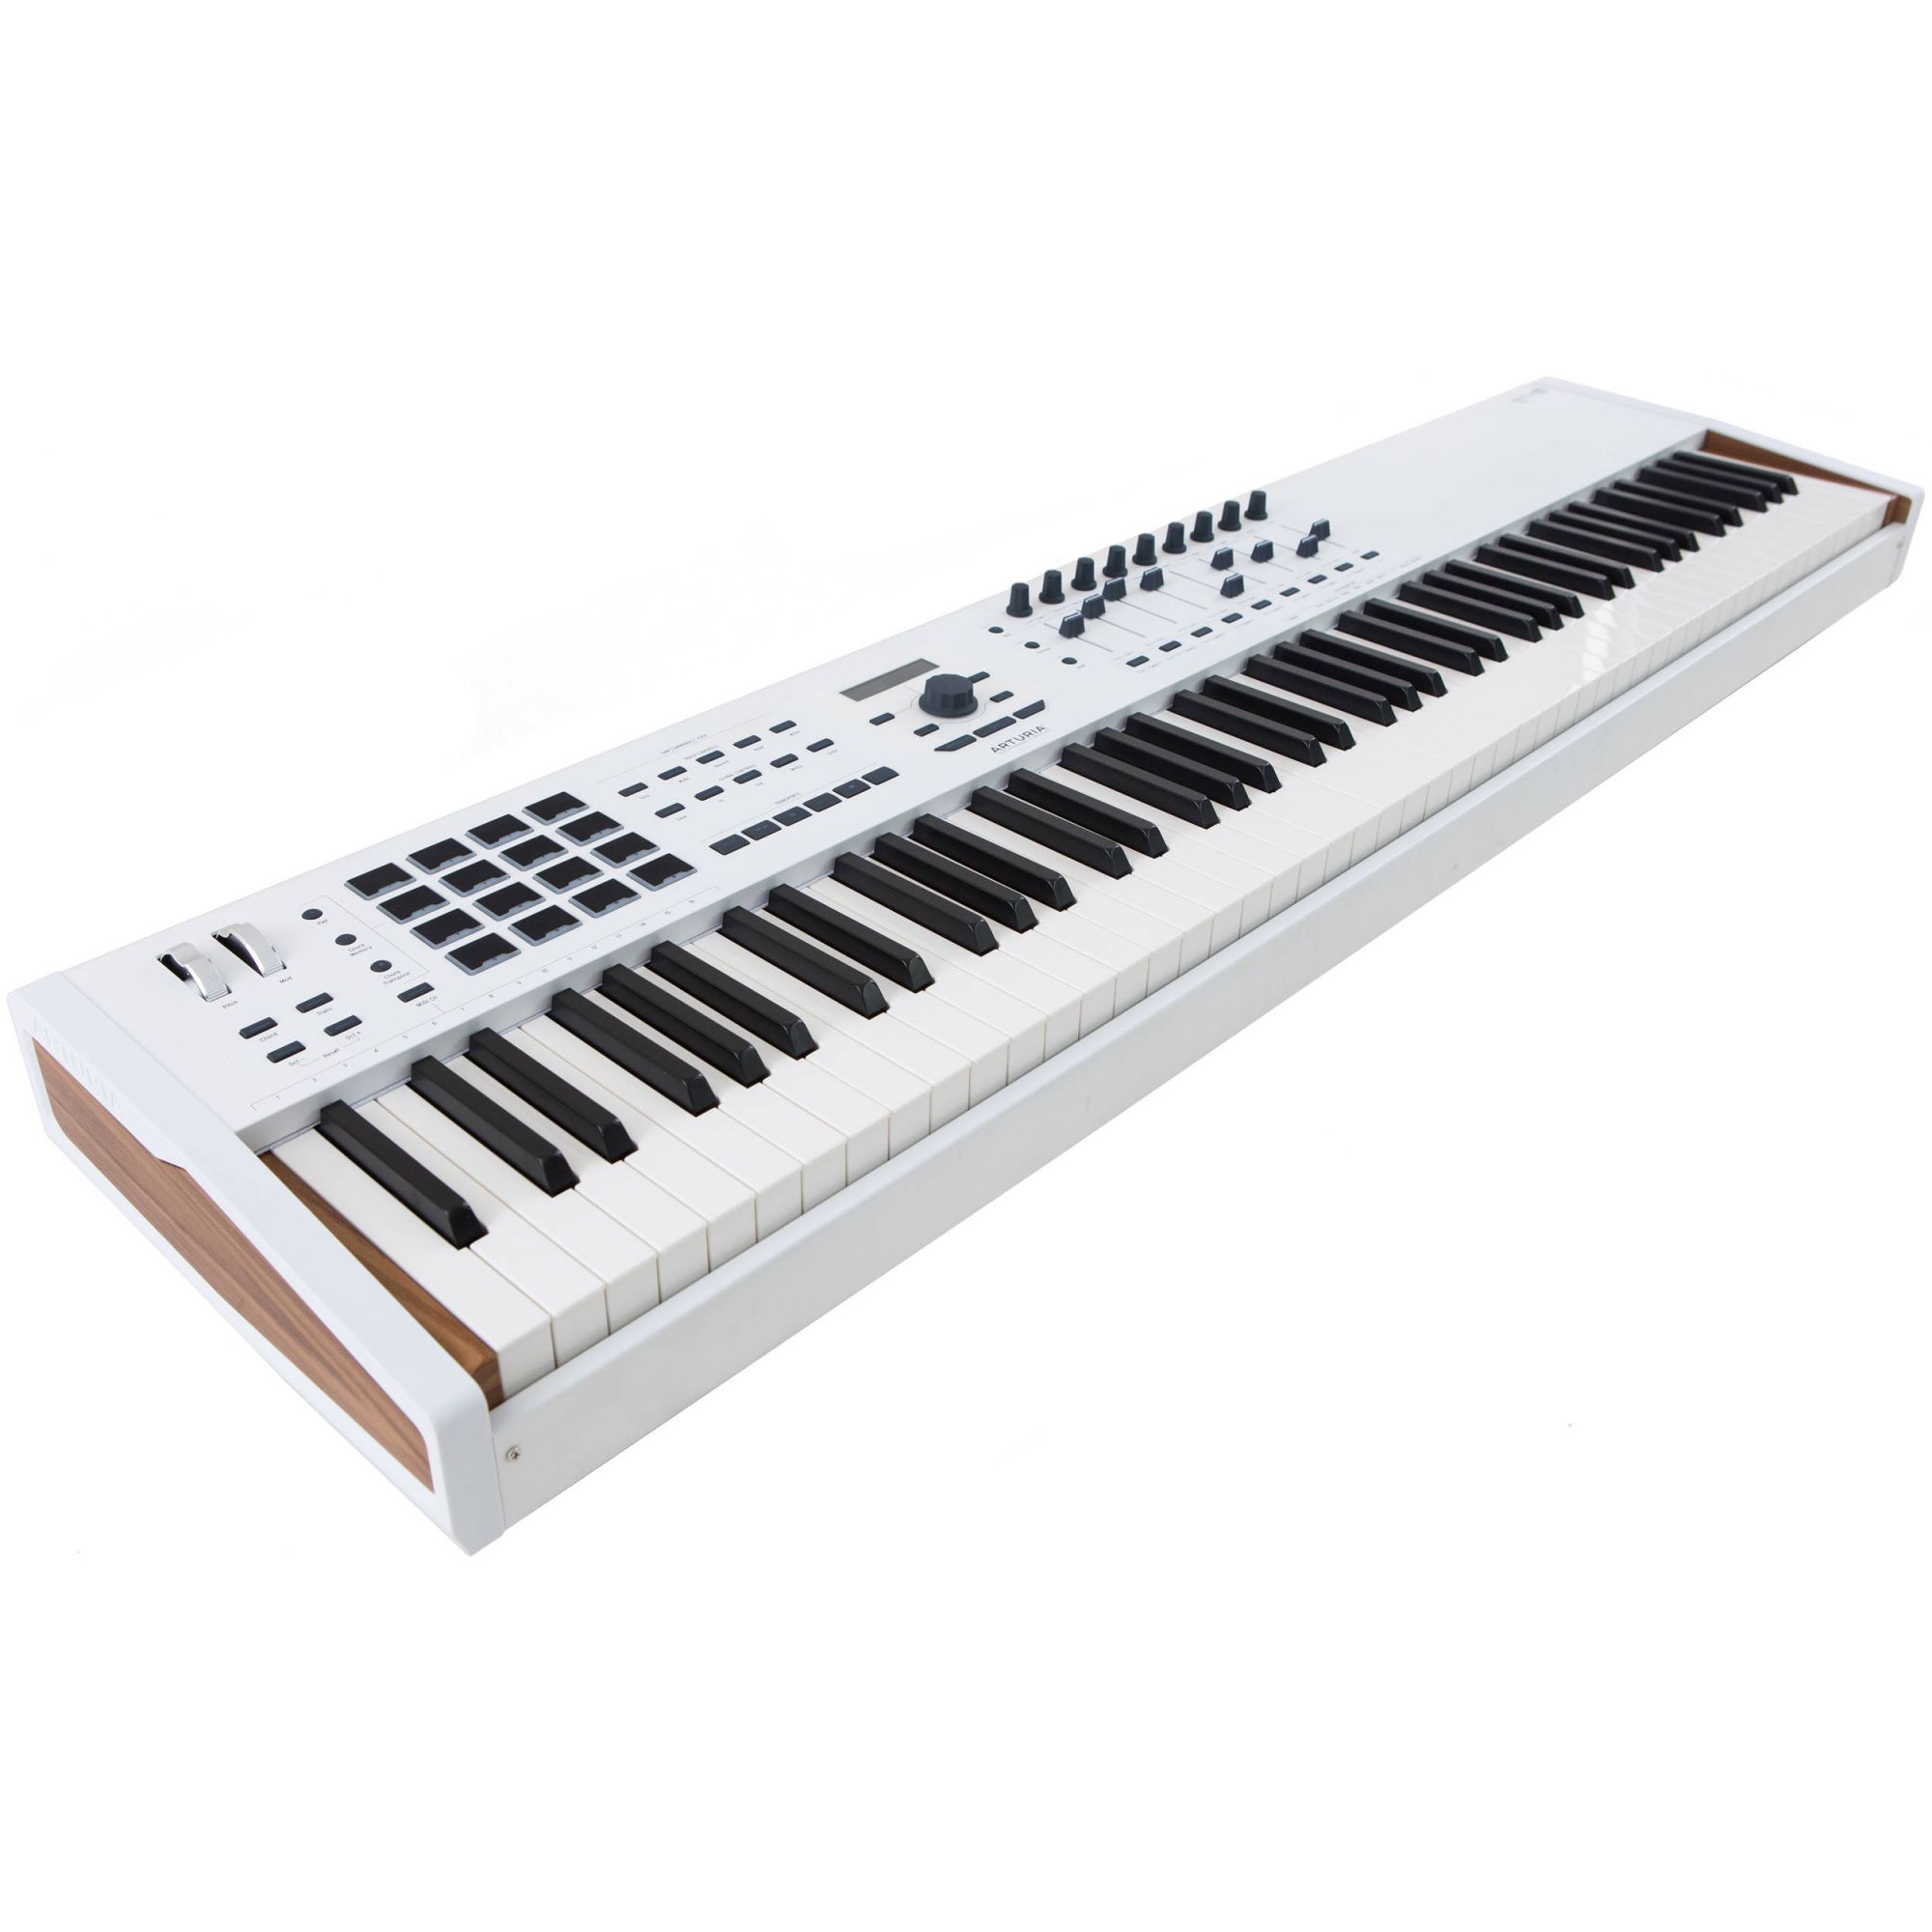 Arturia Keylab Mk2 Controller Supreme Midi Keyboard White Buy Midi Keyboard Online In India Johnsmusic In